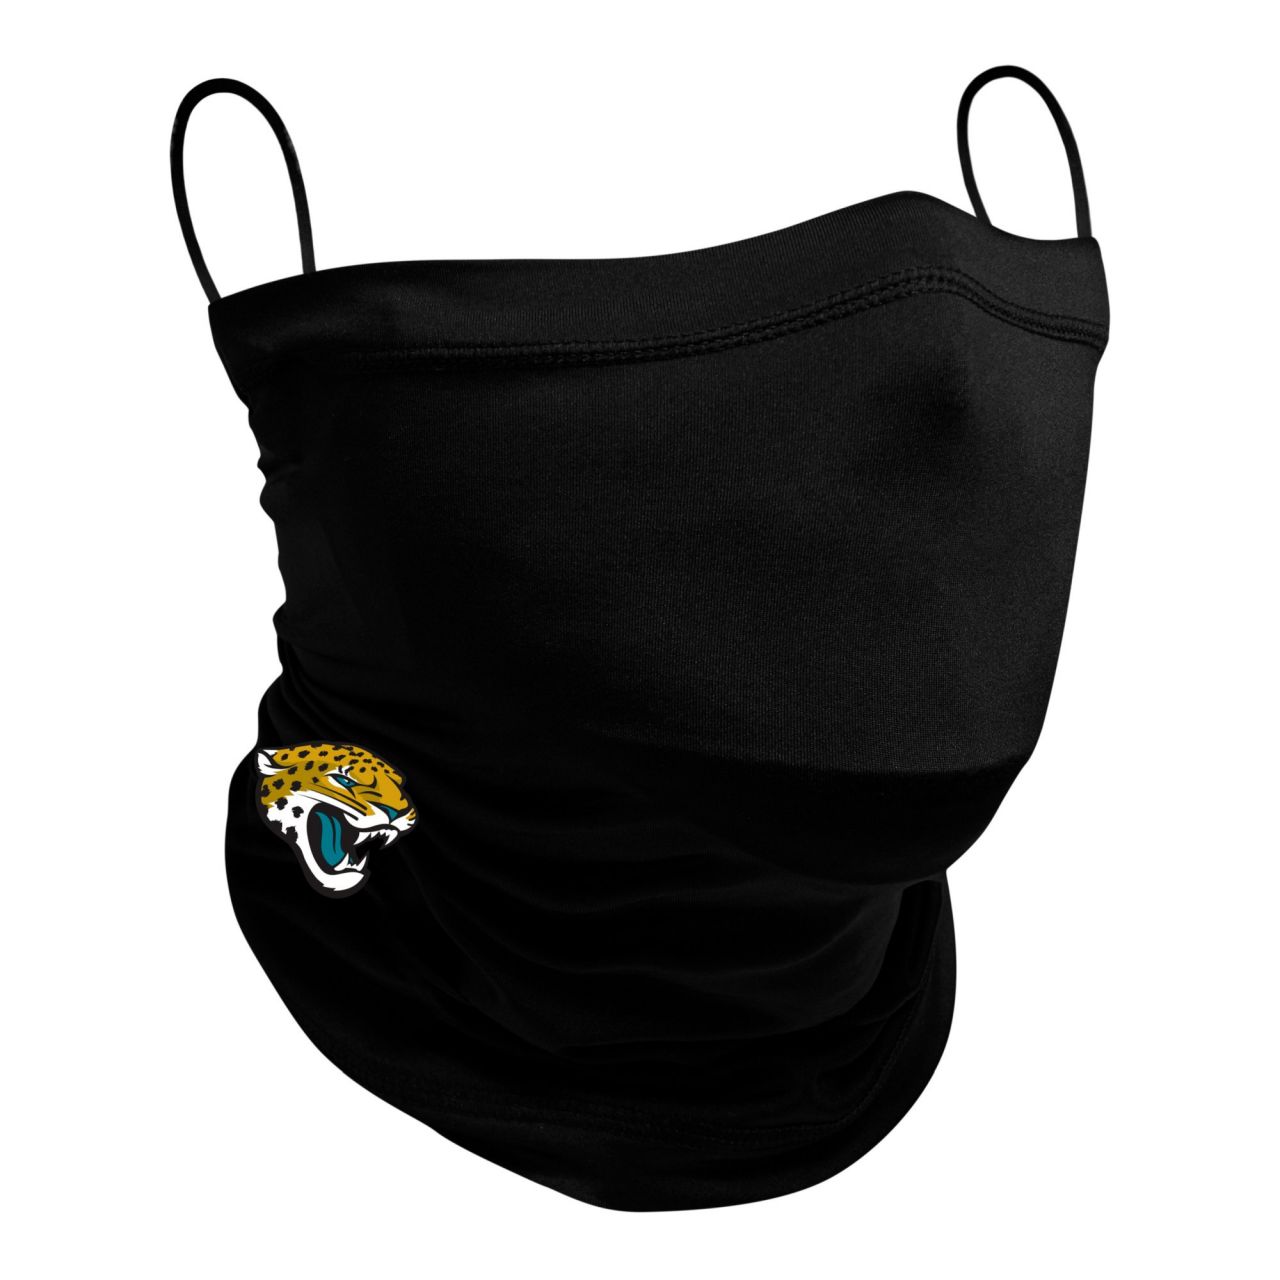 amfoo - New Era NFL Halstuch Kopfbedeckung - Jacksonville Jaguars